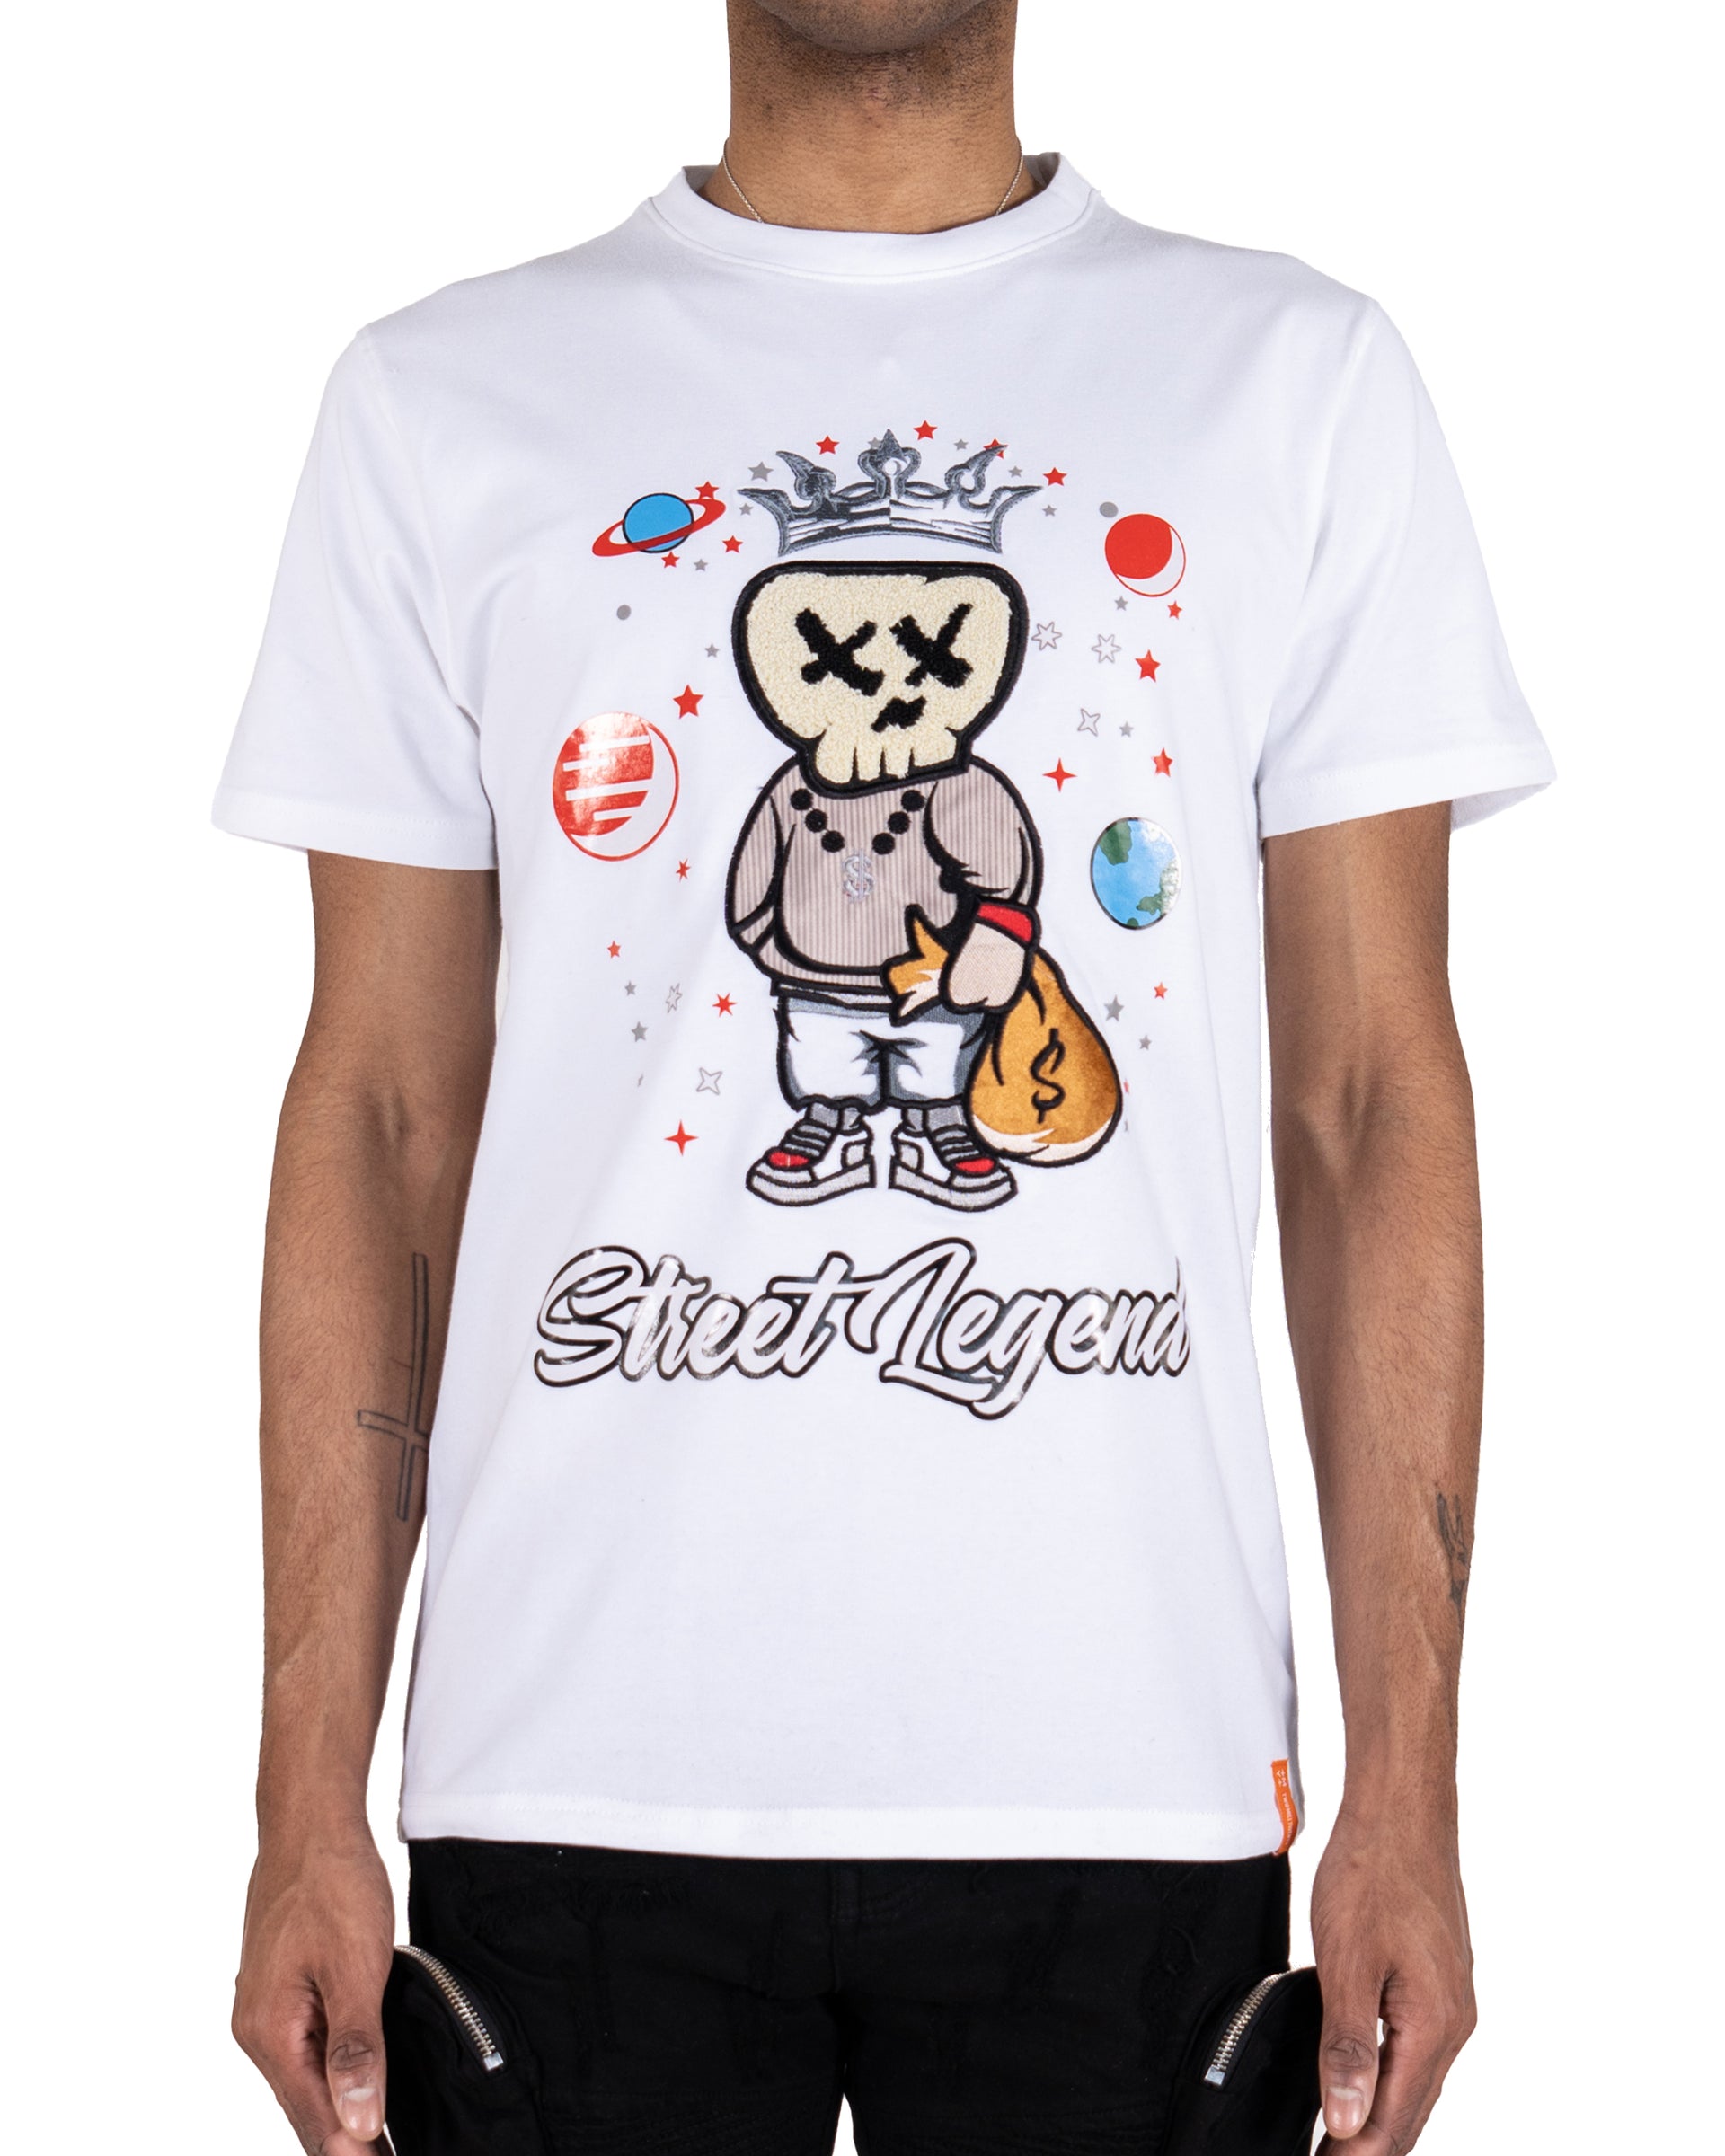 Men's "Street Legend" Graphic T-Shirt | White